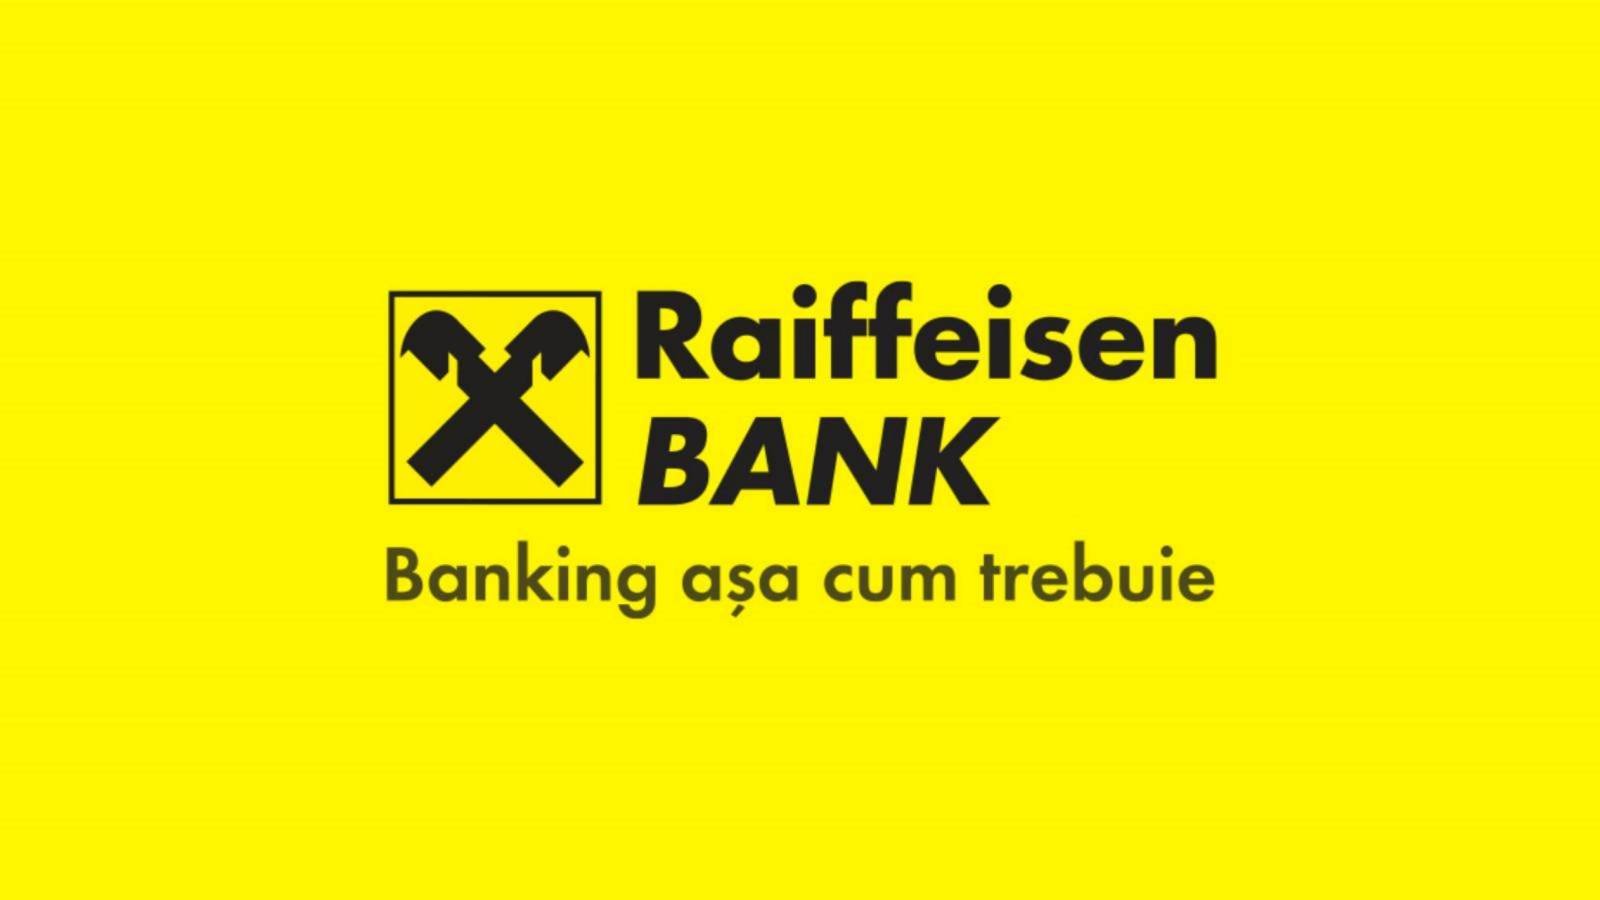 Raiffeisen Bank Anuntul OFICIAL Vizeaza Clientii Toata Romania